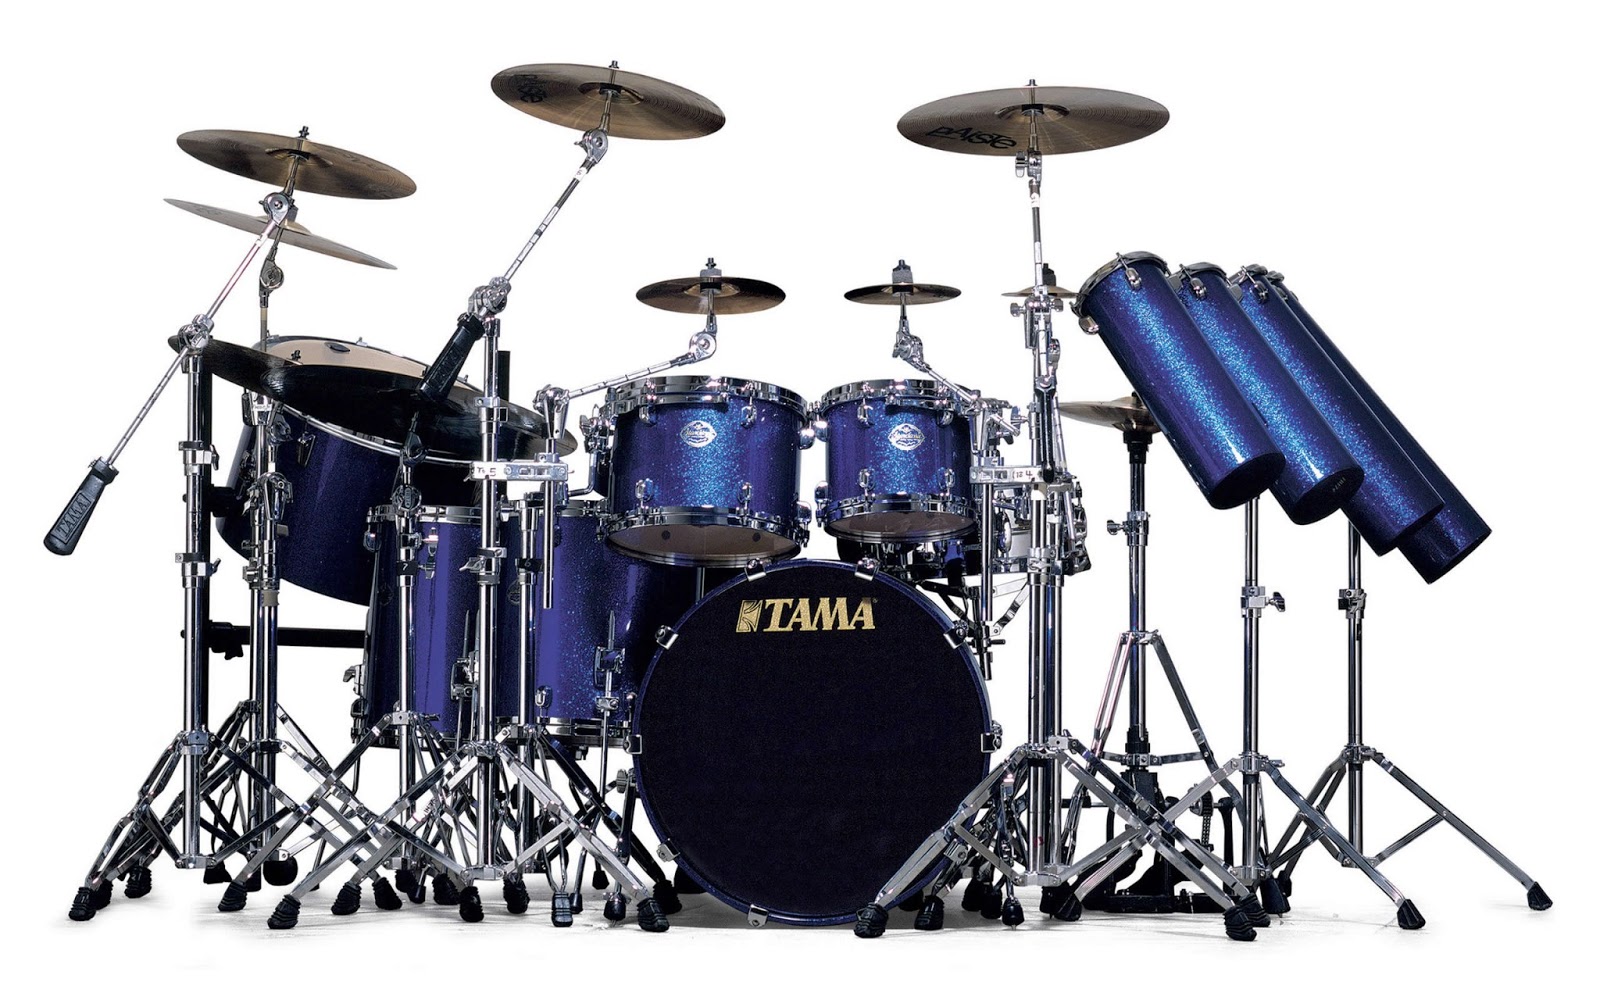 DRUMS music percussion drum set kit wallpaper  4032x3024  976107   WallpaperUP